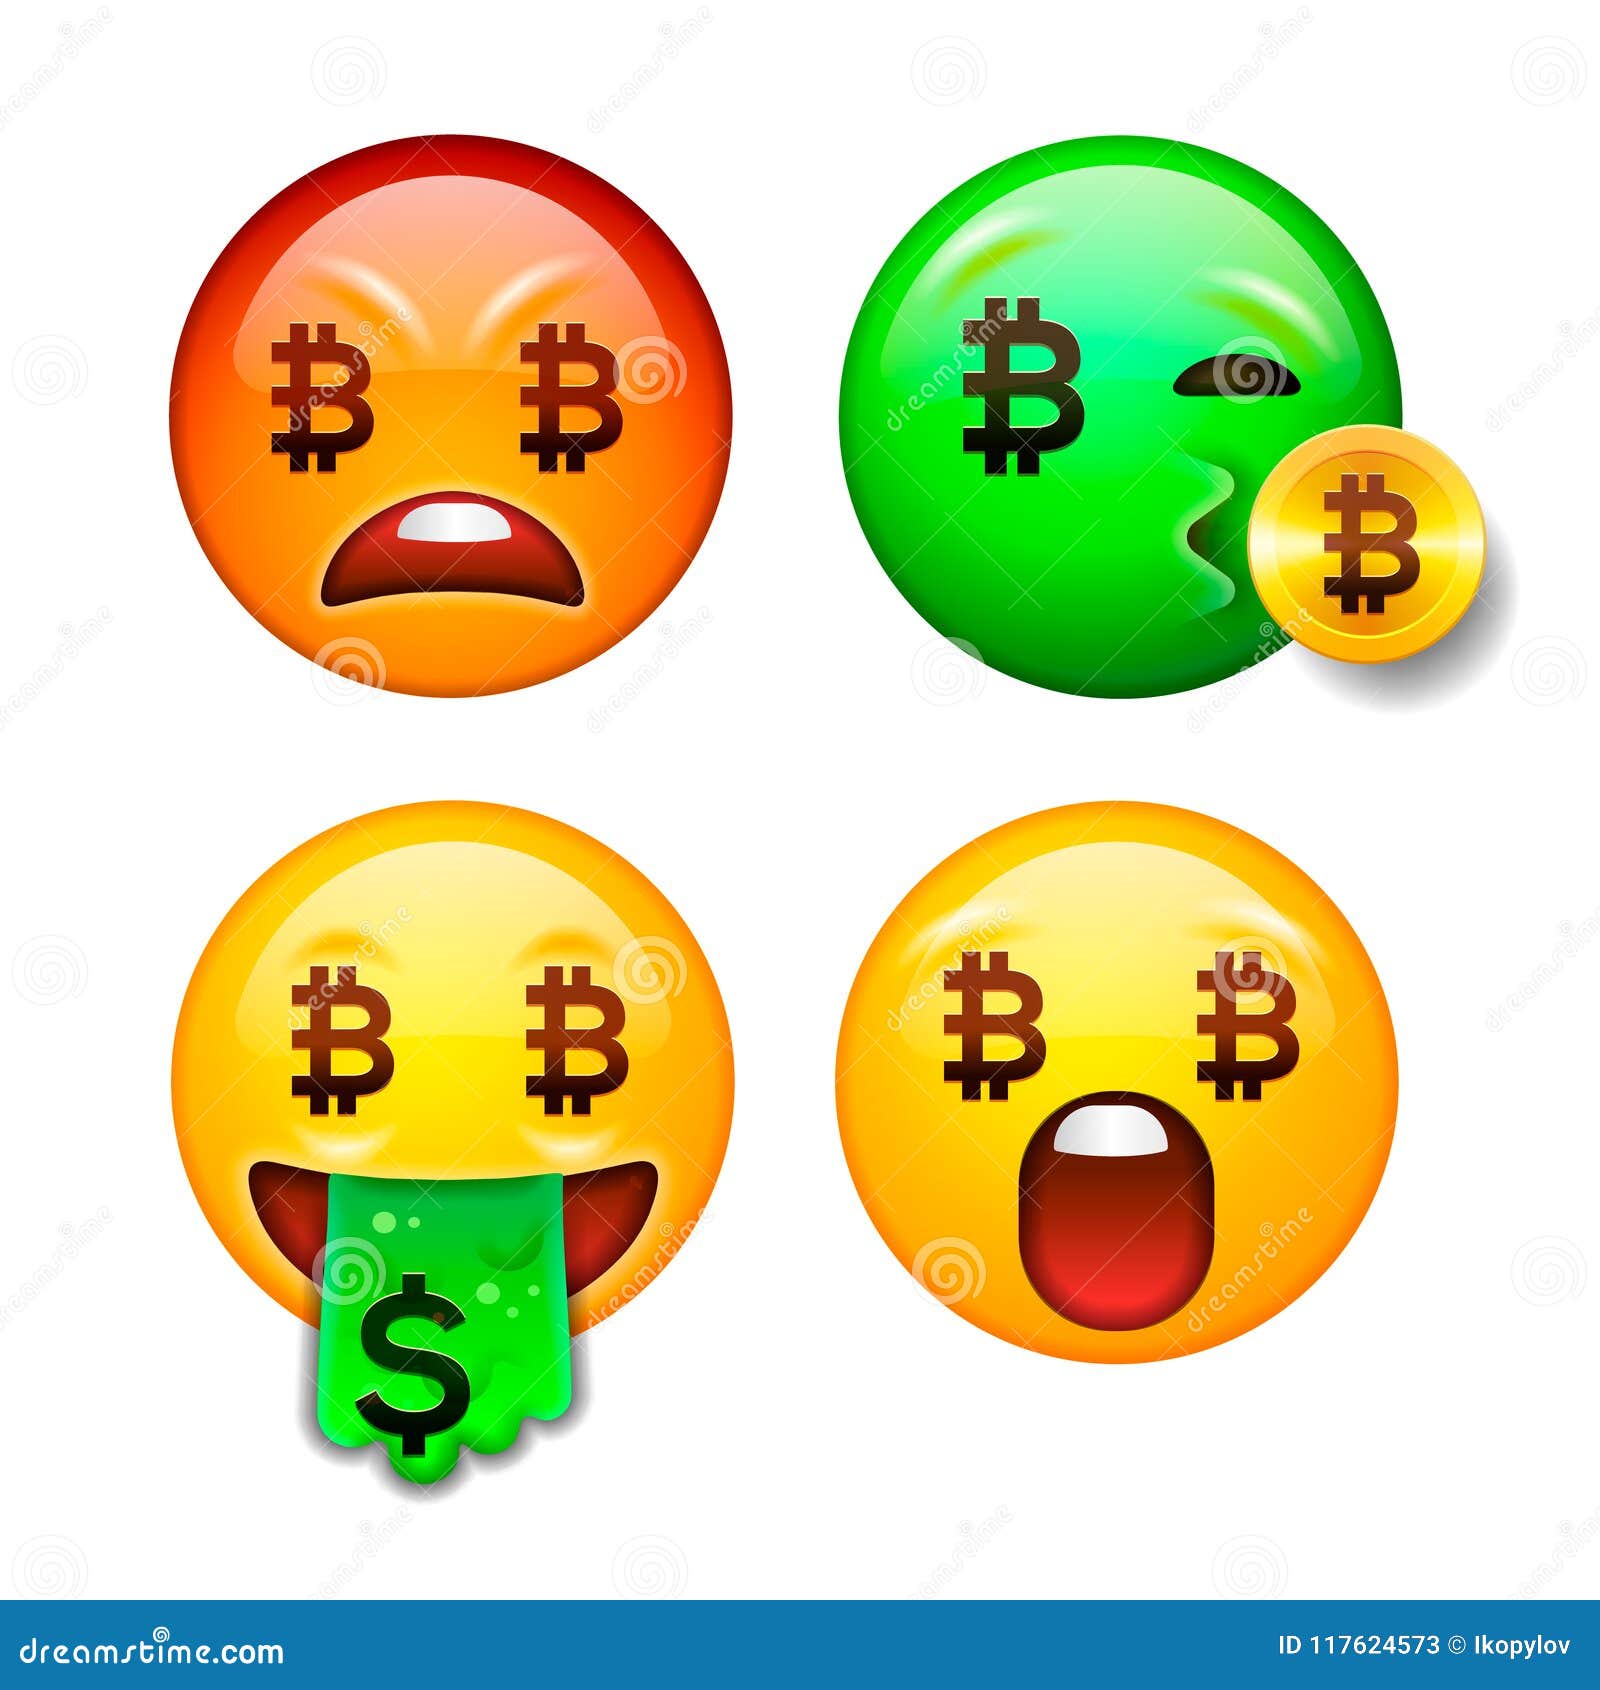 Bitcoin Emojis | ₿🪙₿ 💰 | Copy & Paste